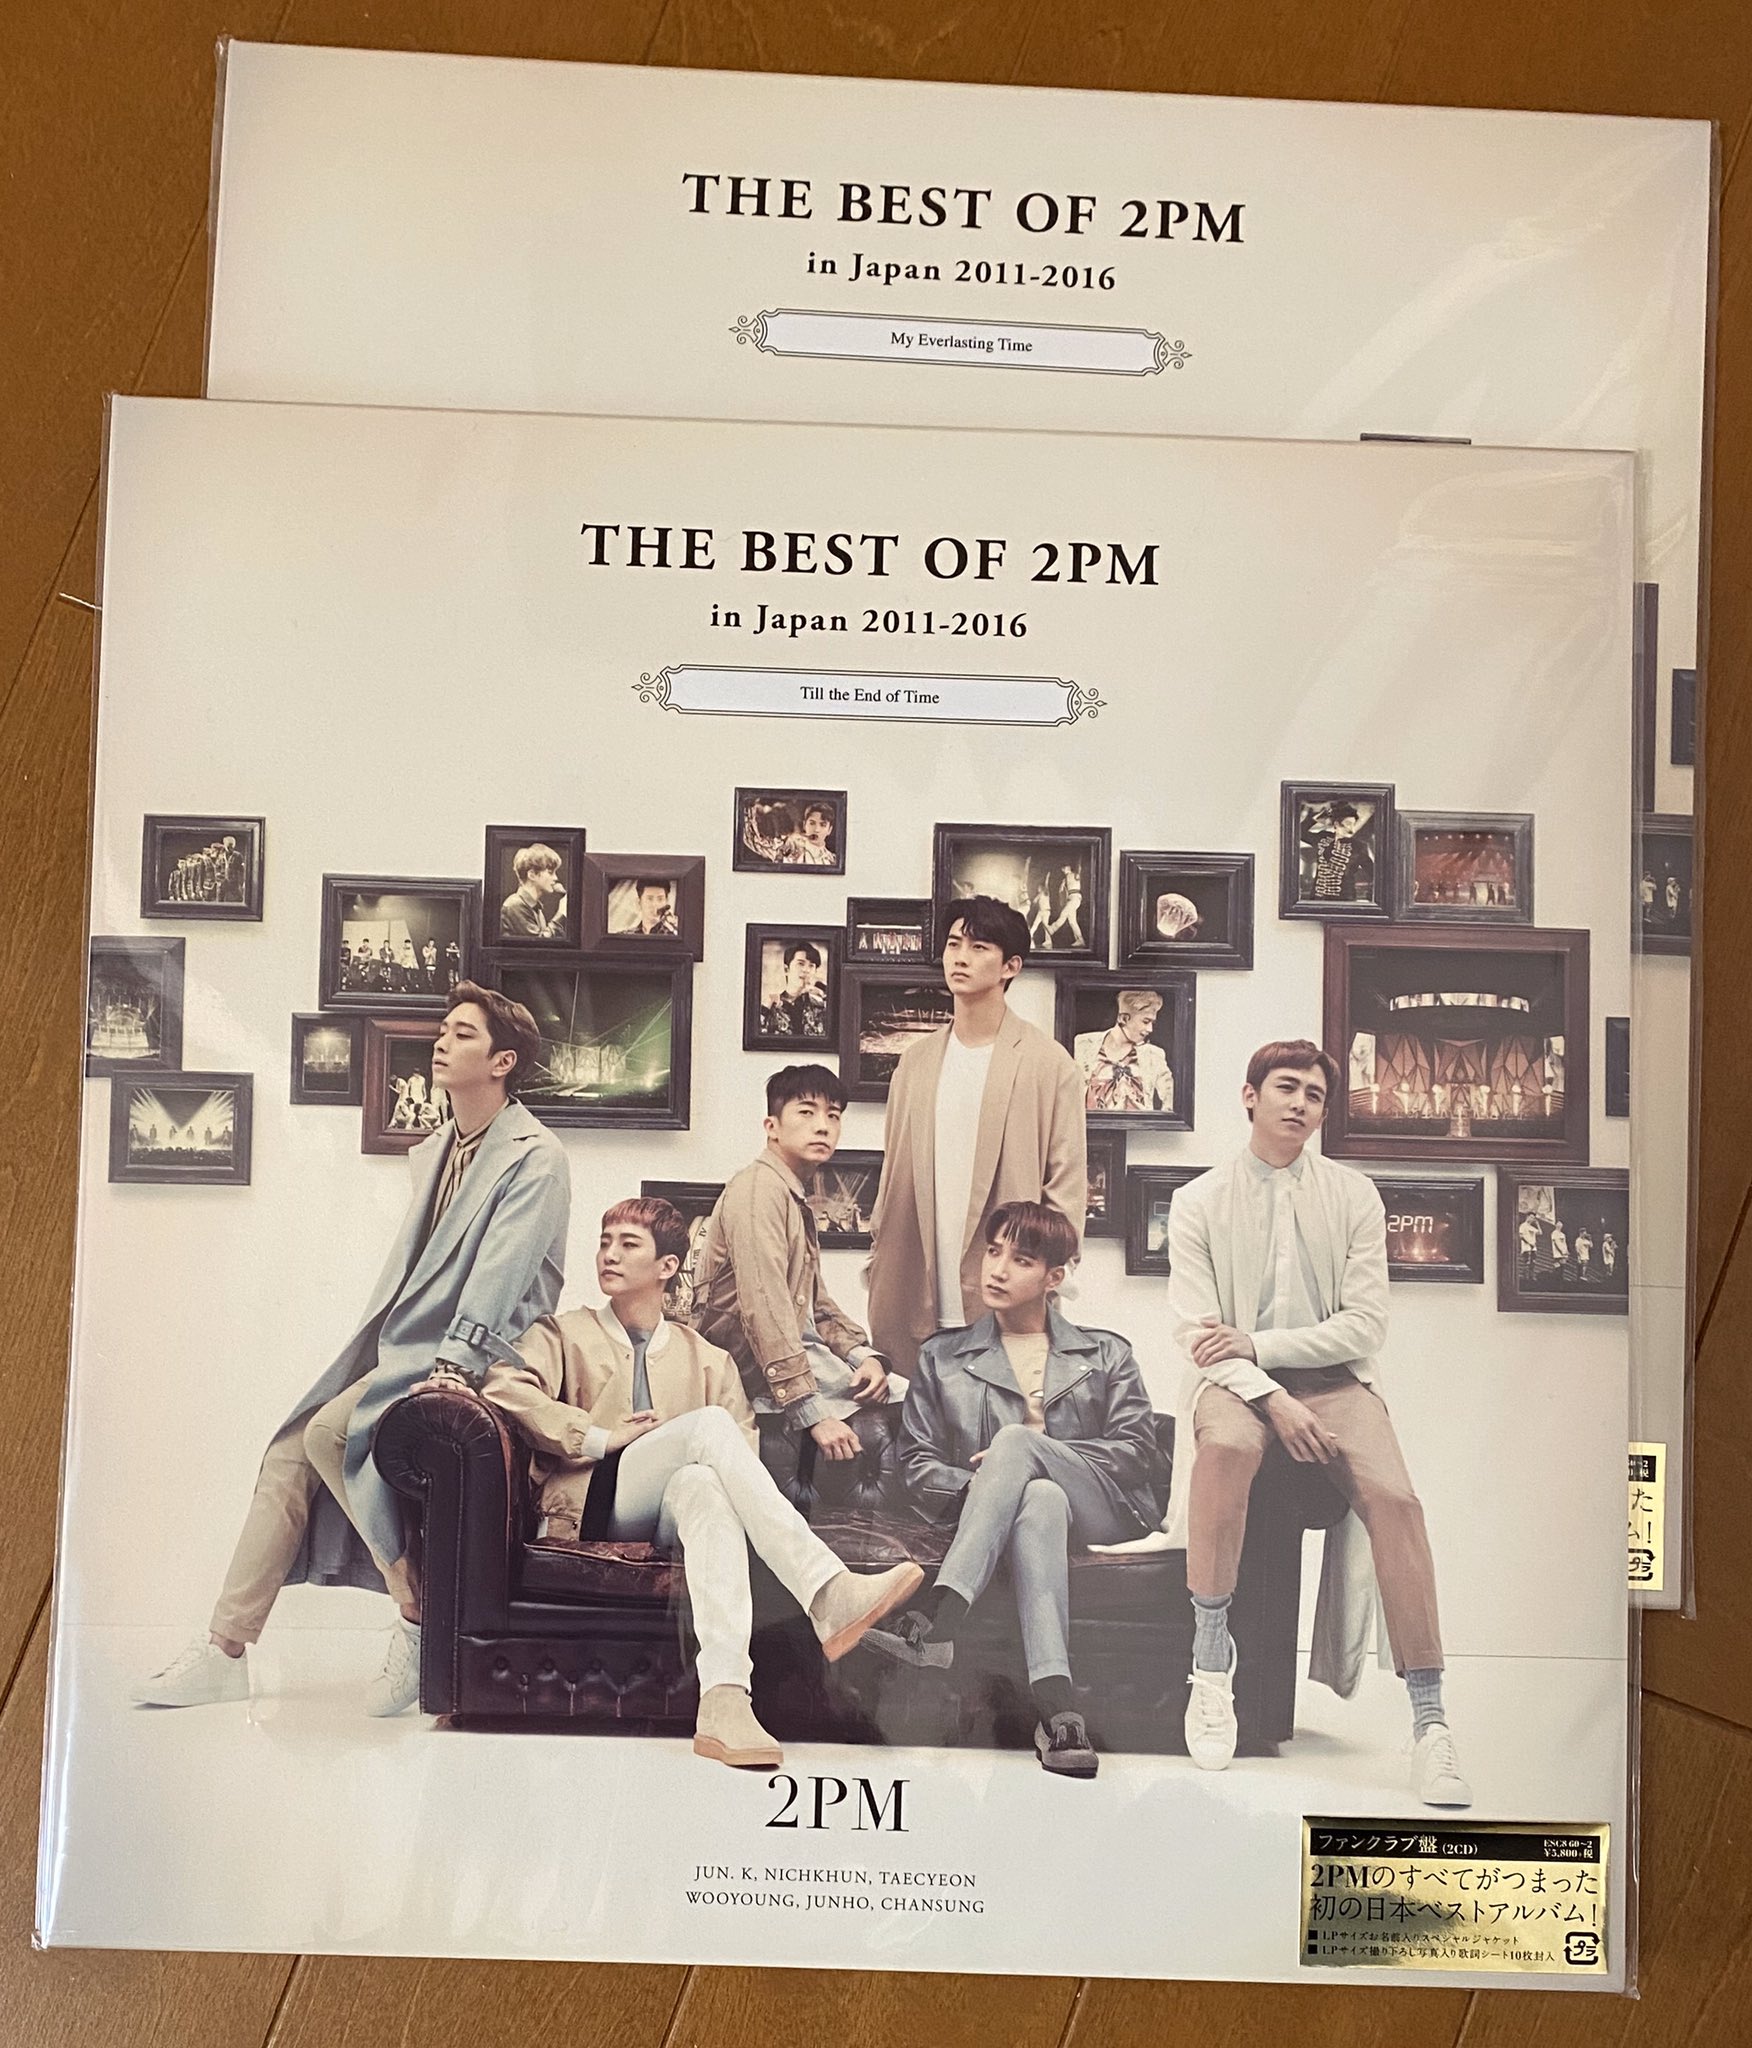 THE BEST OF 2PM in Japan 2011-2016 LPサイズ-